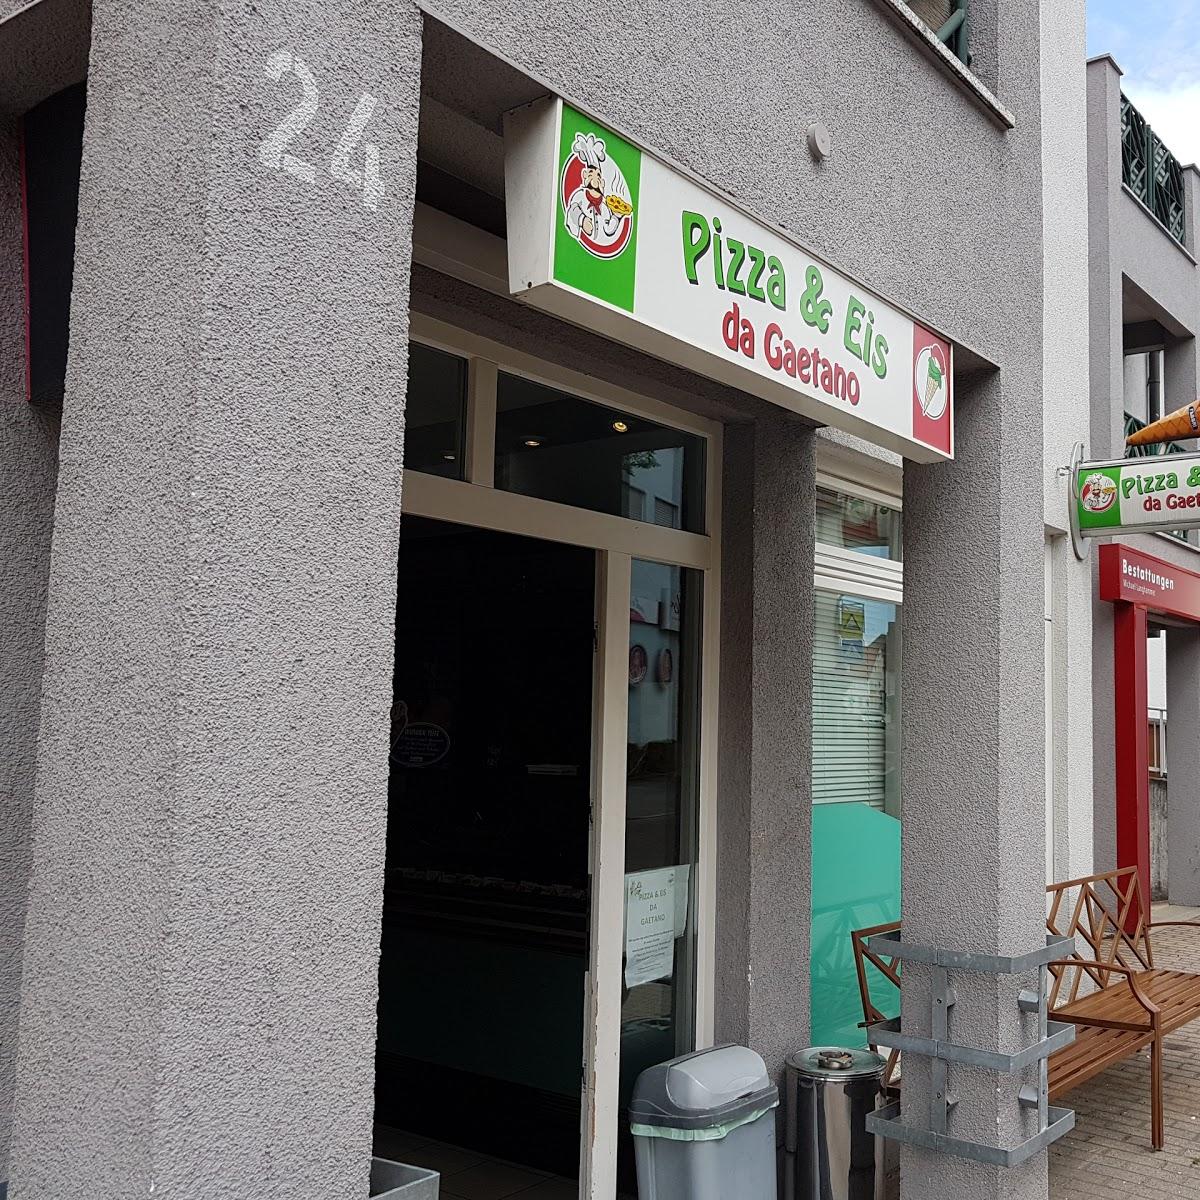 Restaurant "Pizza & Eis da Gaetano" in Remshalden